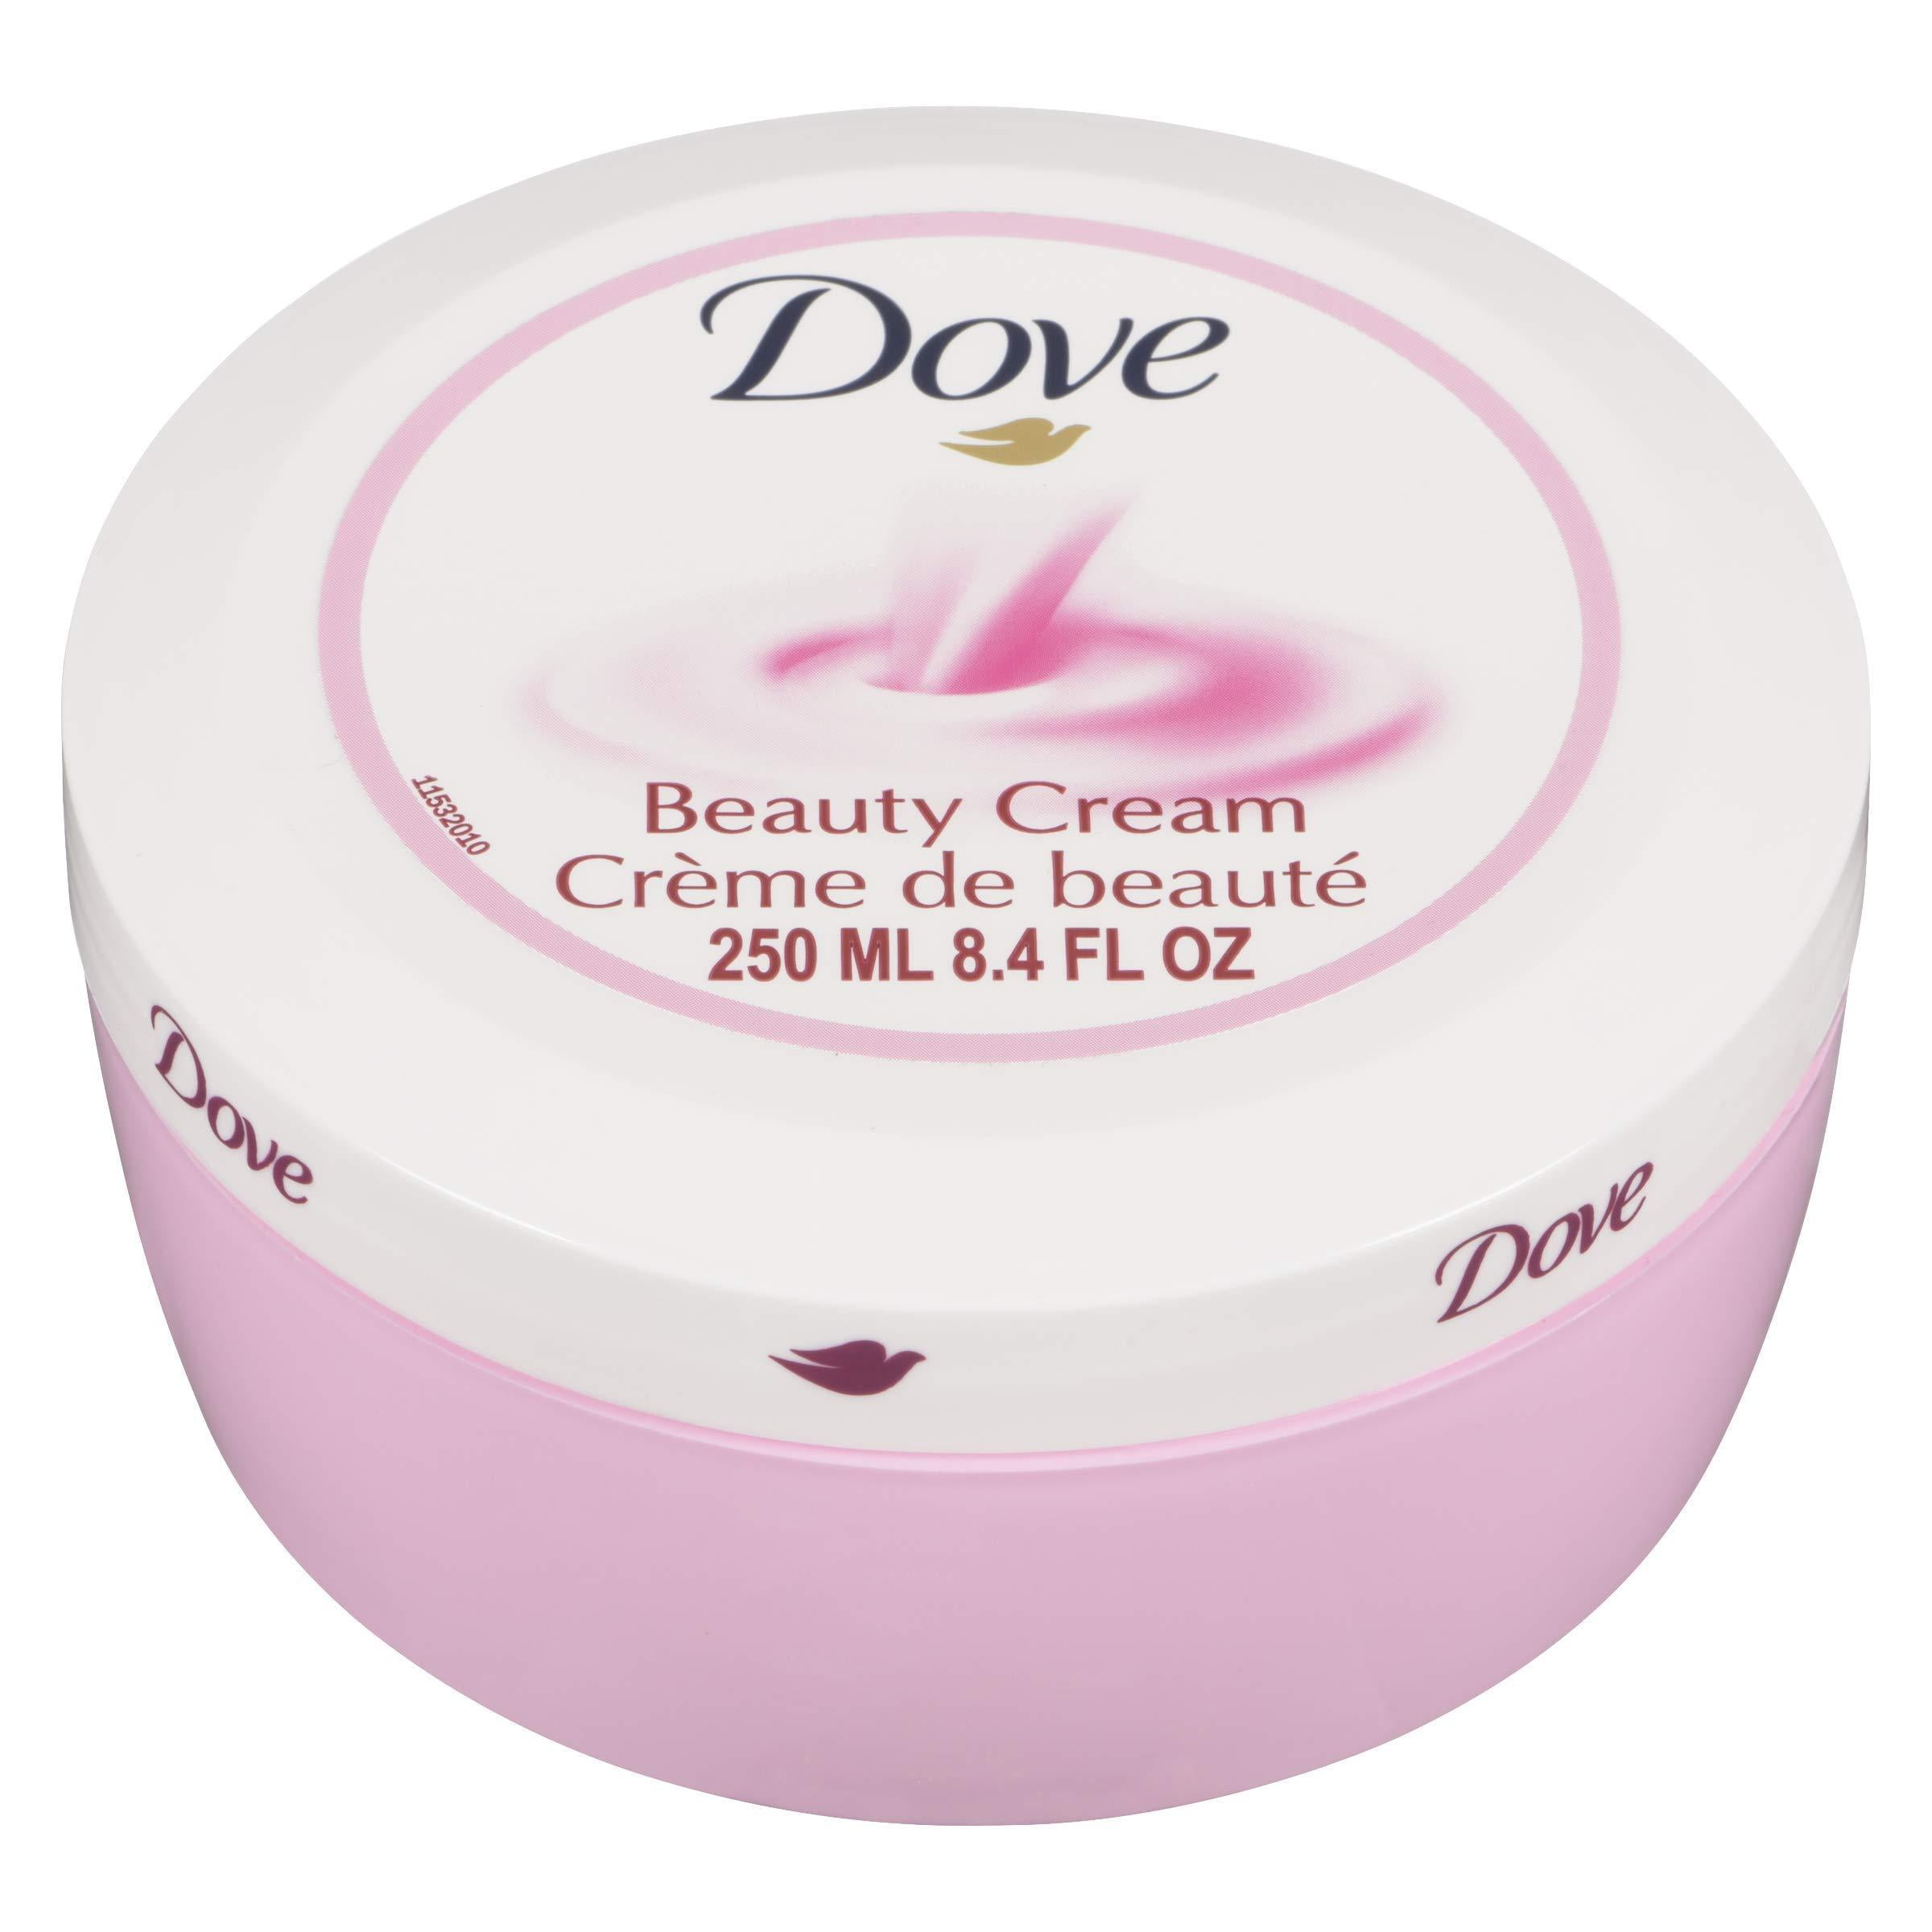 Dove Beauty Cream Untuk Apa - Homecare24